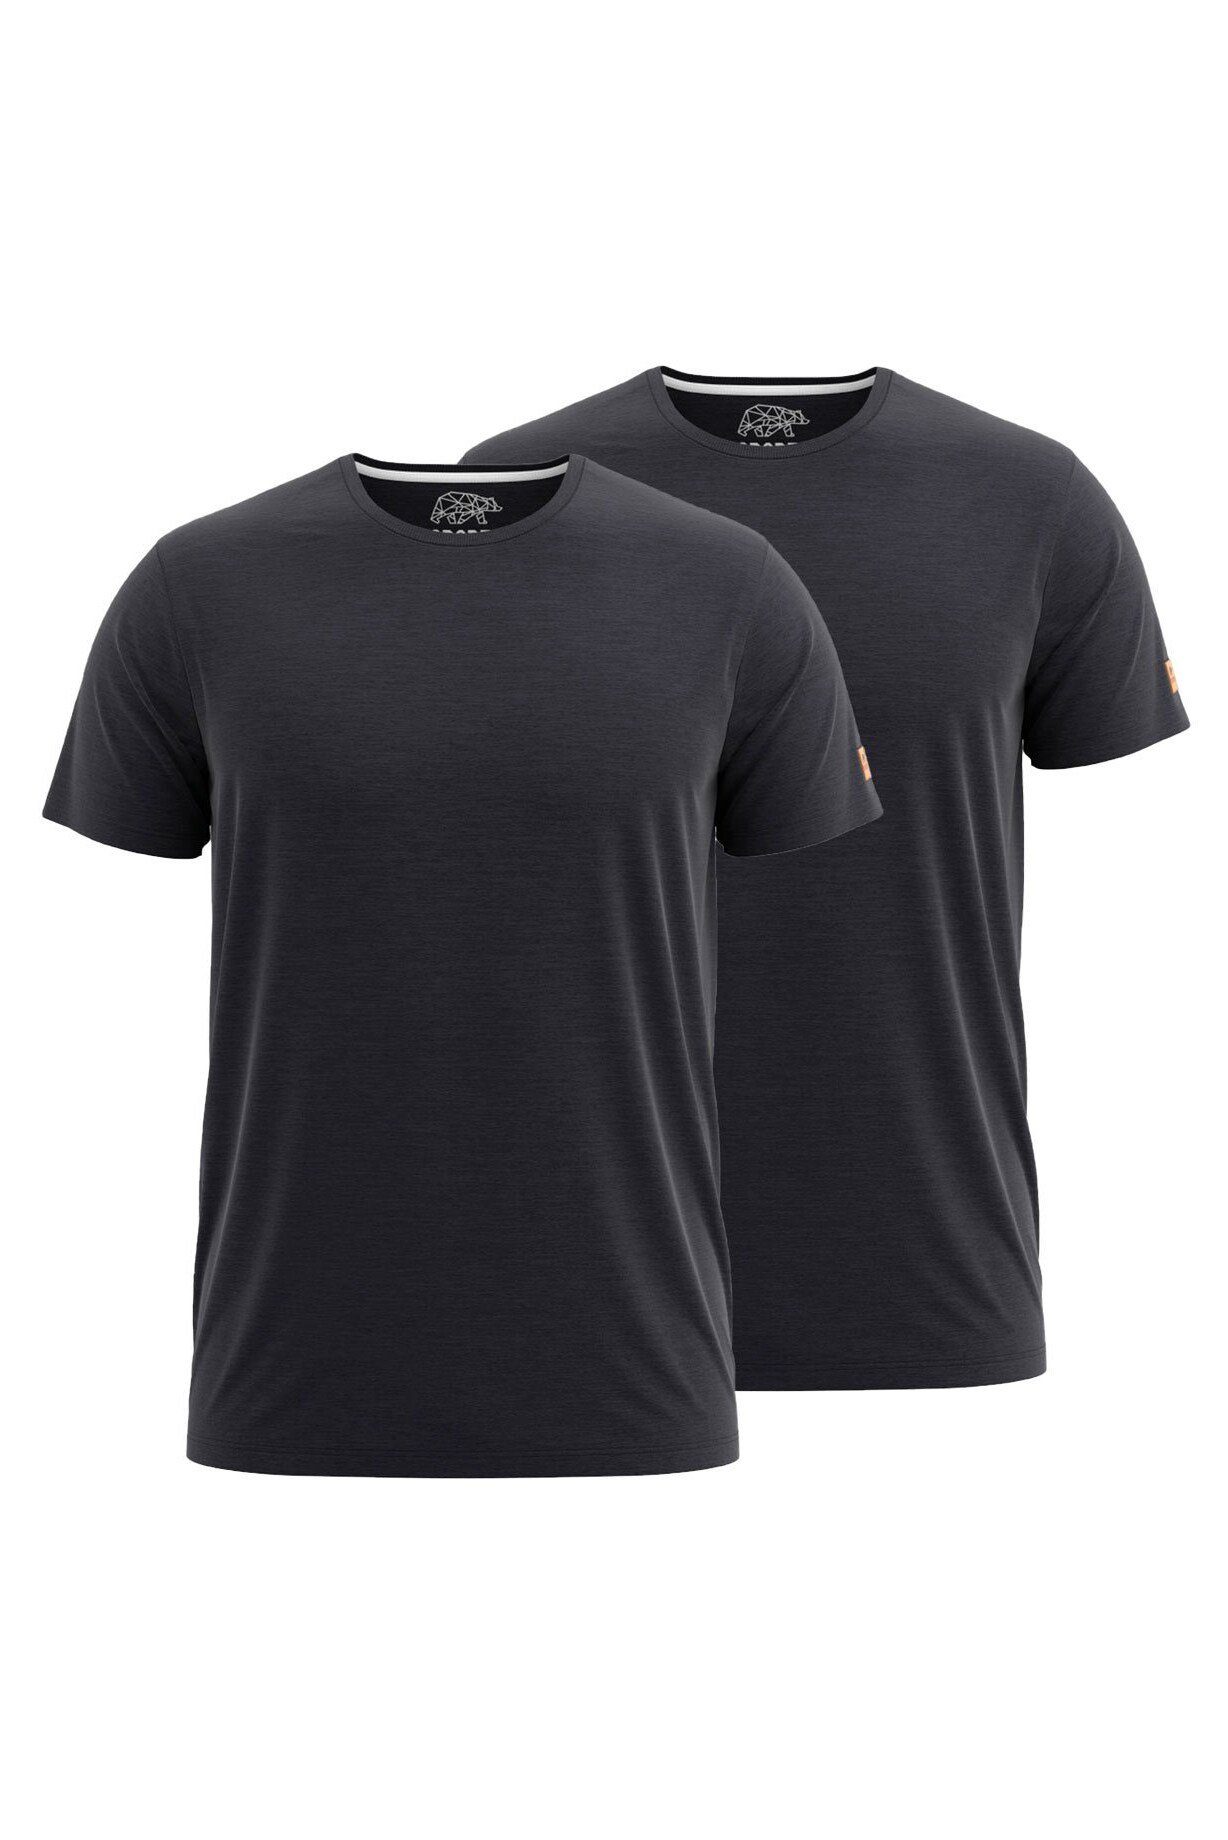 FORSBERG T-Shirt T-Shirt 1/2 Doppelpack schwarz